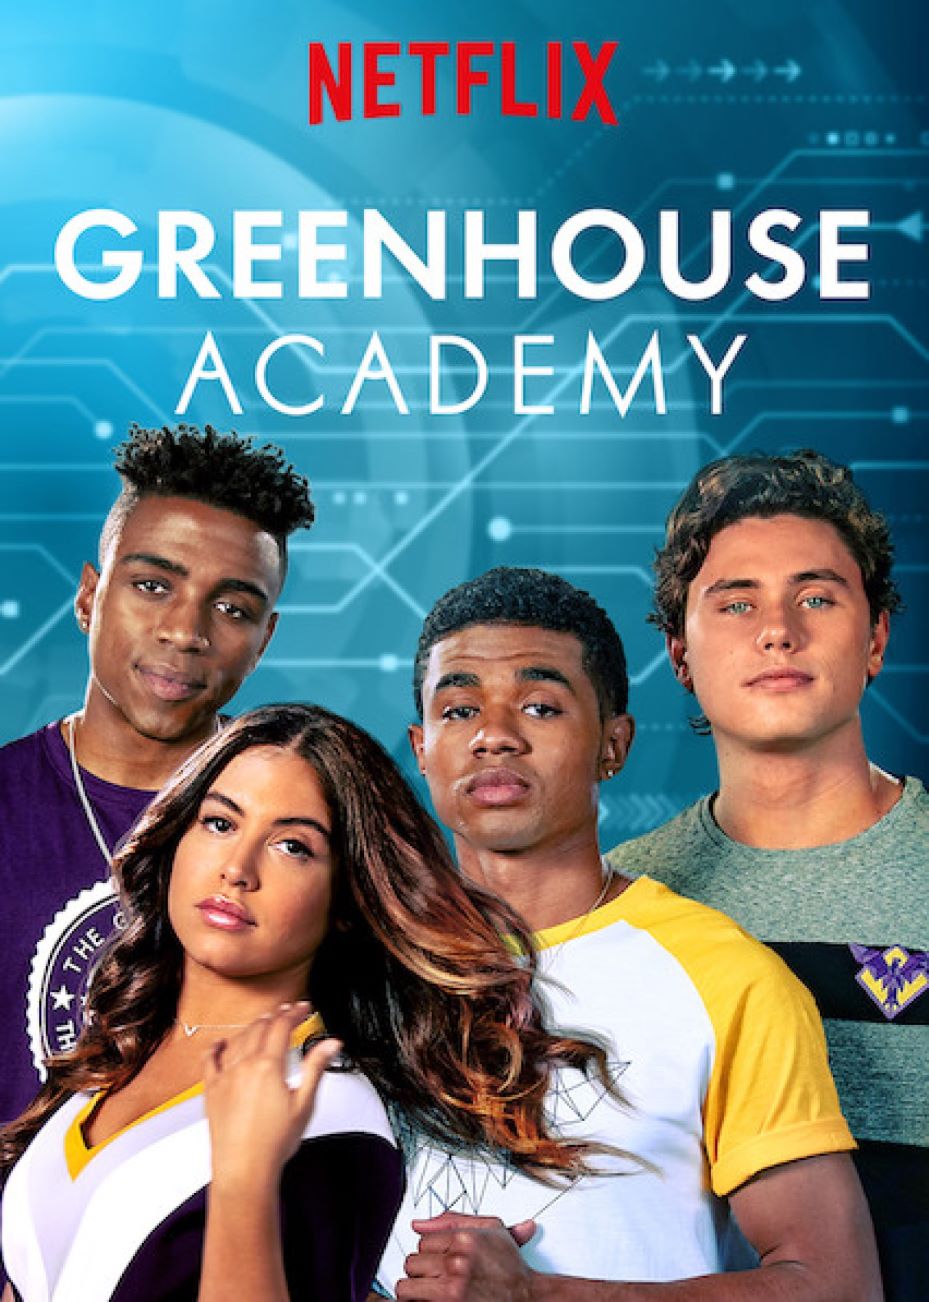 Greenhouse Academy Season 4